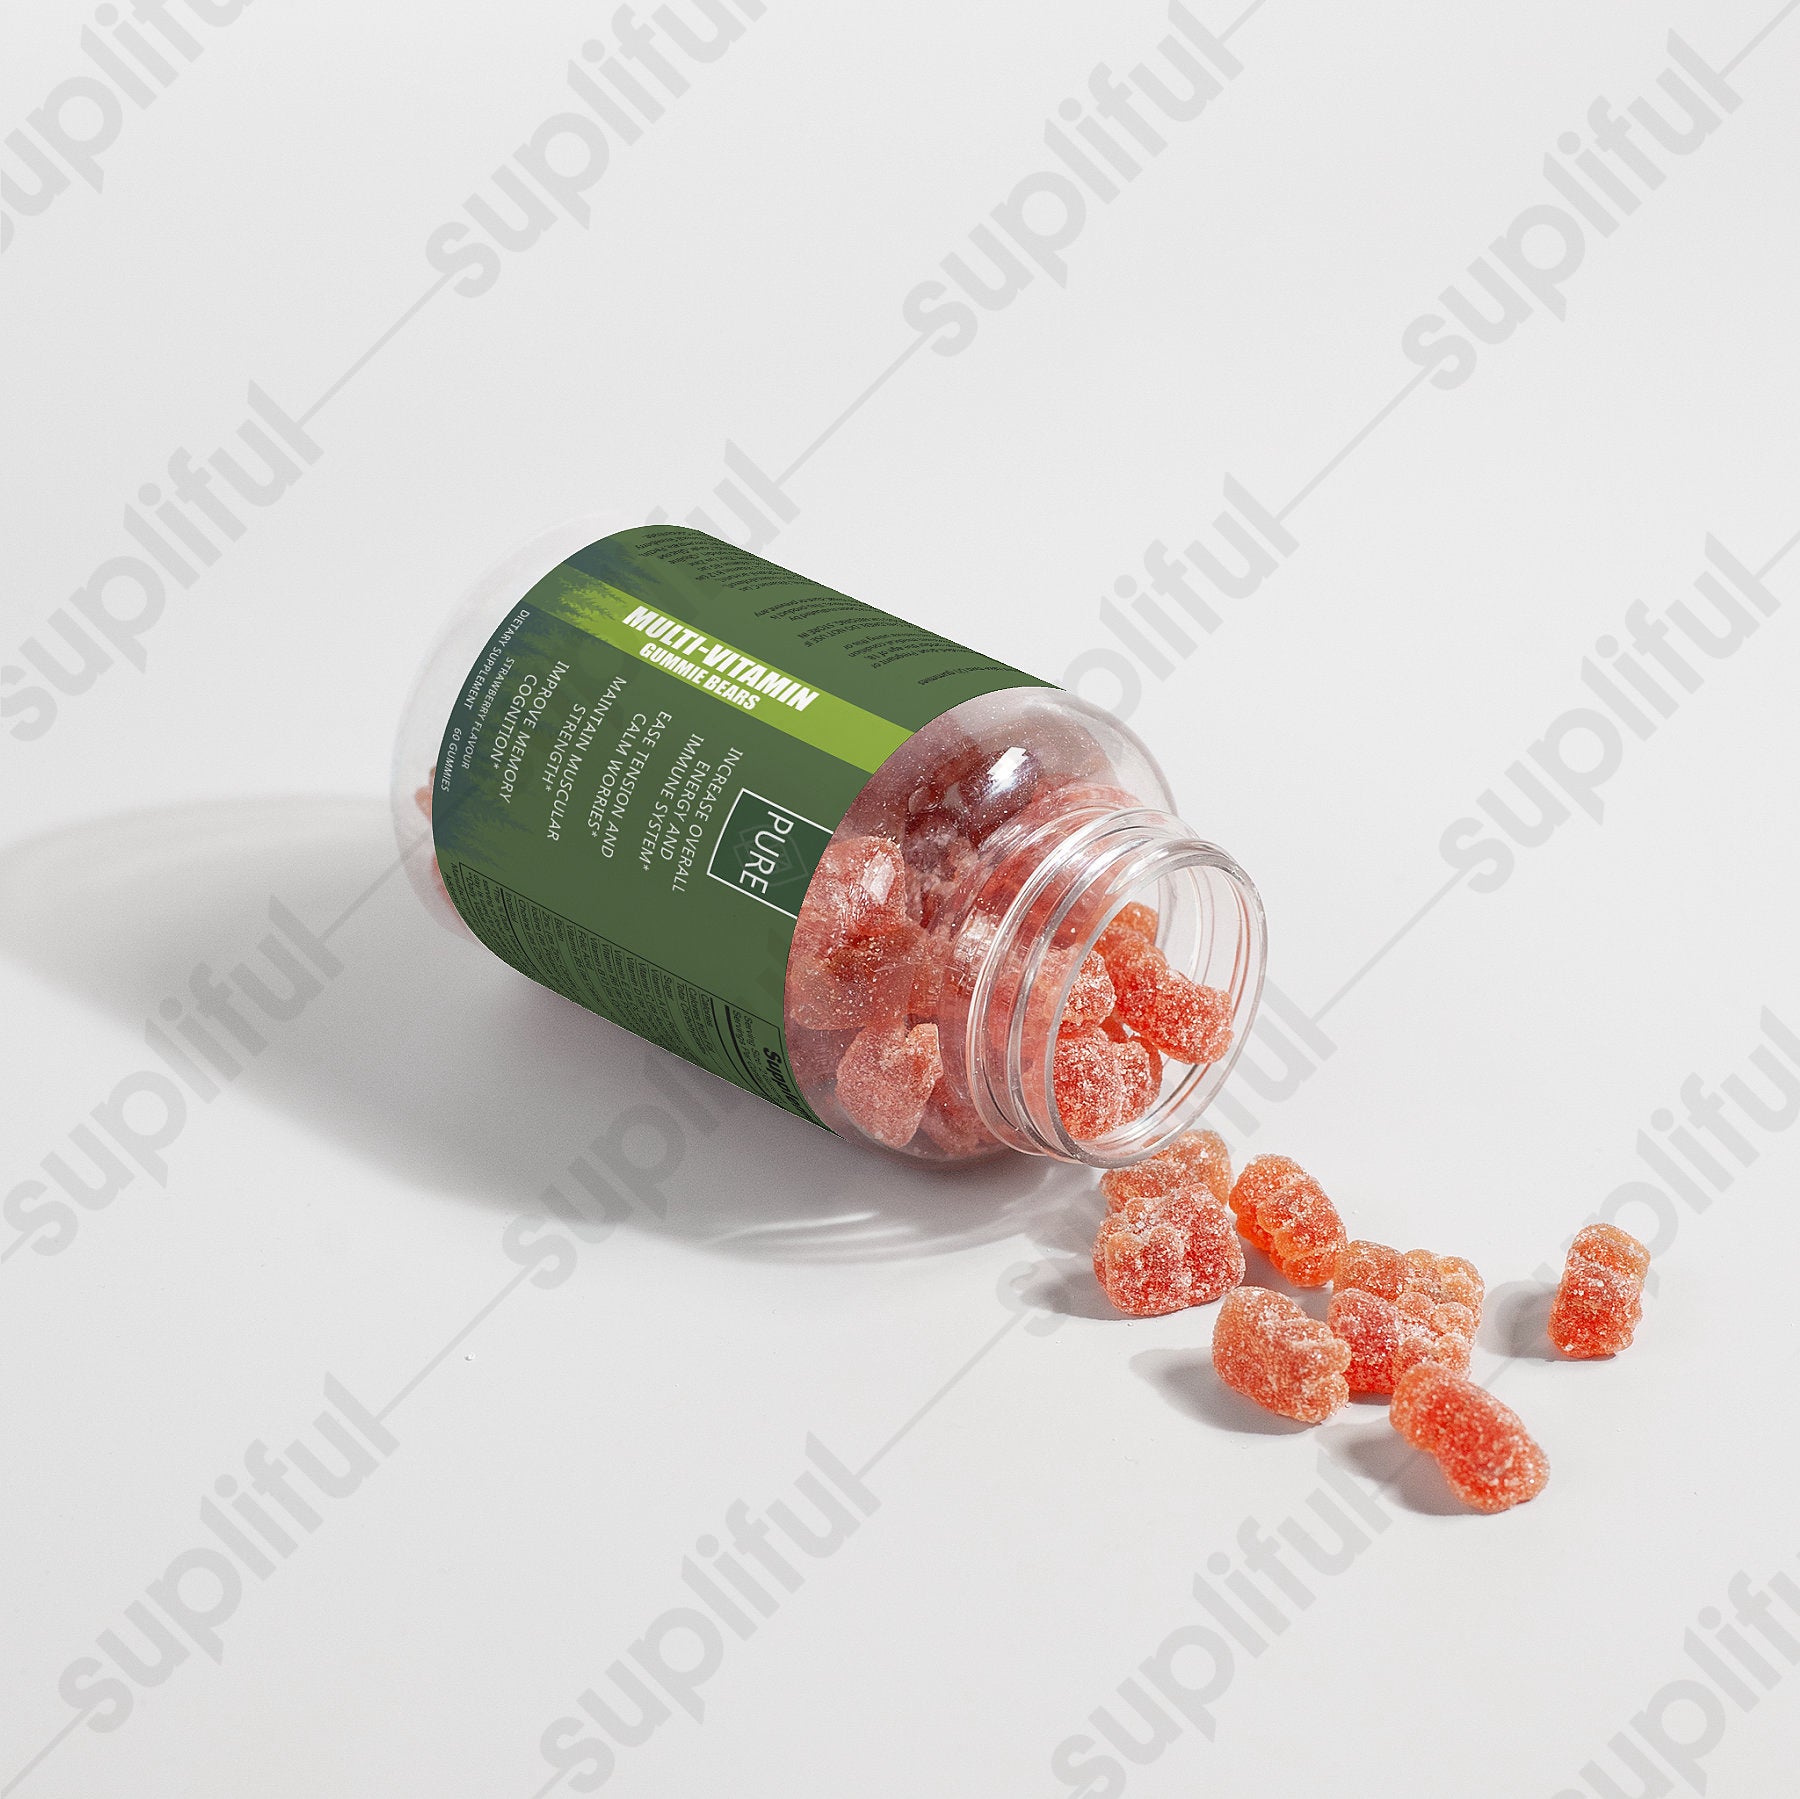 Multivitamin Bear Gummies (Adult) PURE Supplement